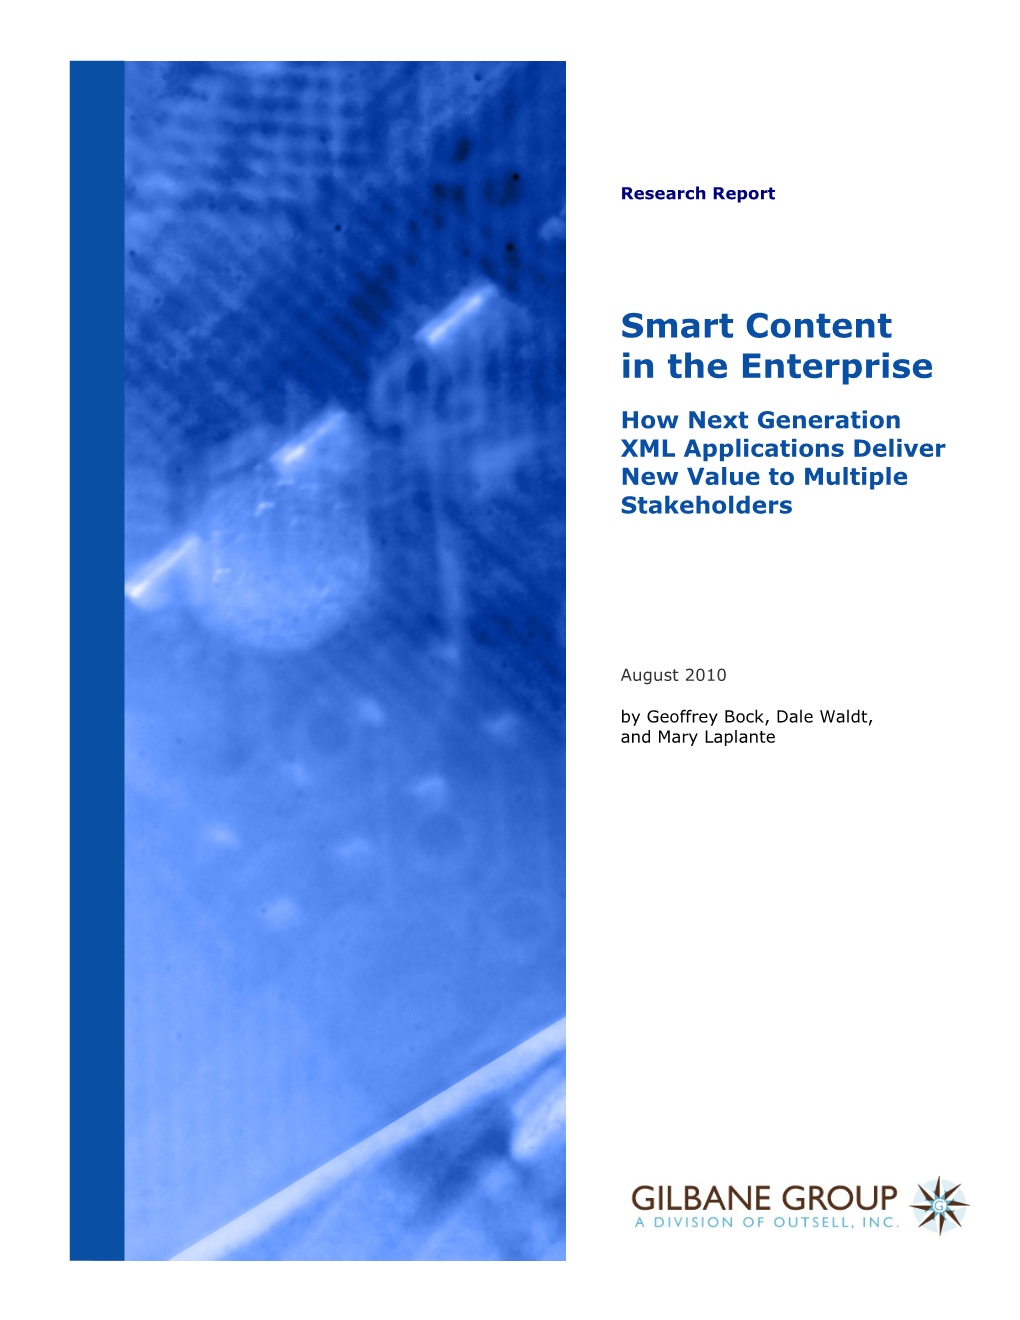 Smart Content in the Enterprise